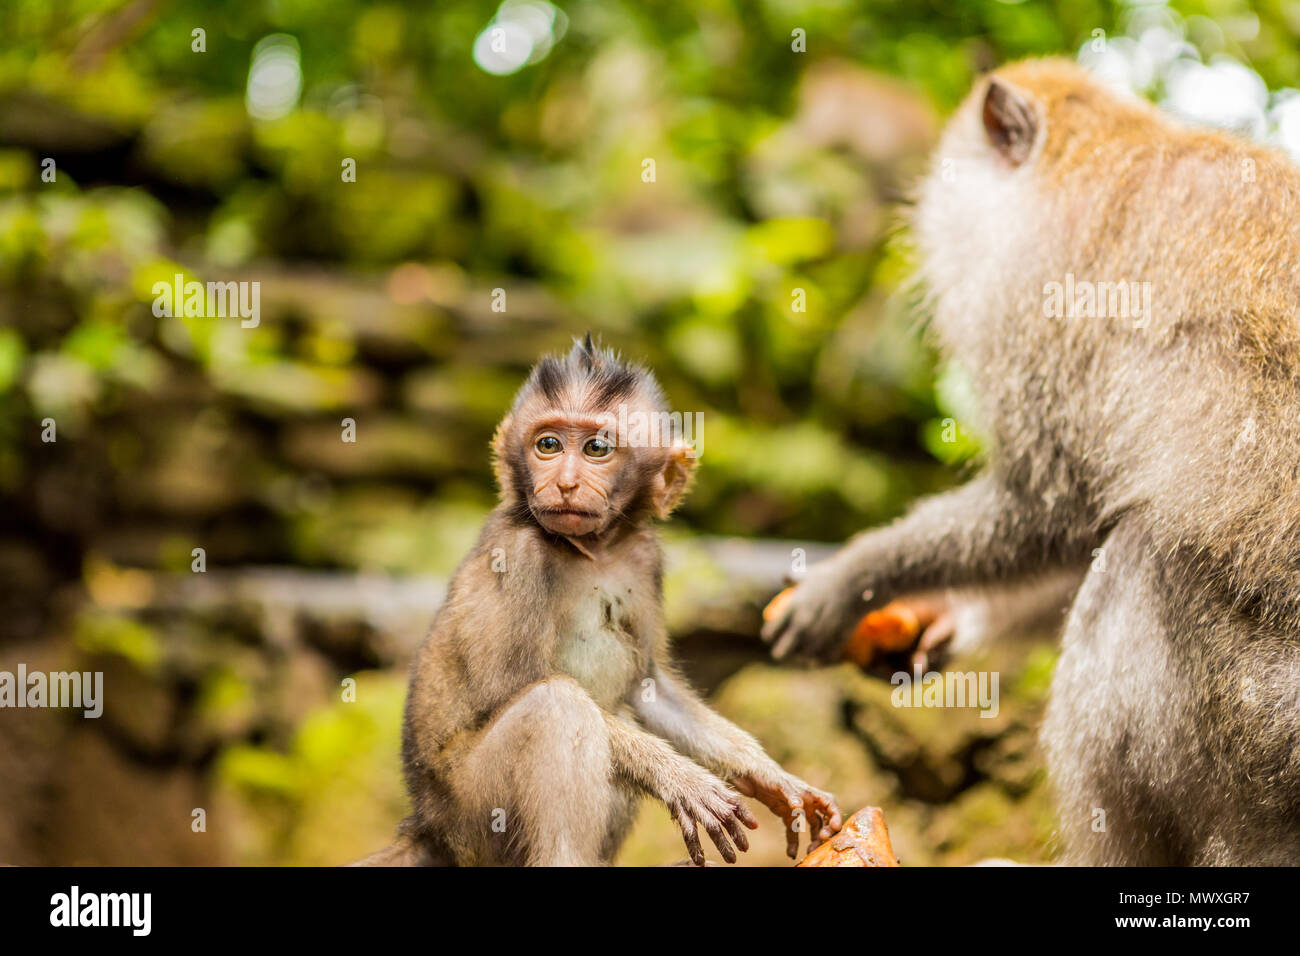 Sacred Monkey Forest in Ubud, Bali, Indonesia, Southeast Asia, Asia Stock Photo